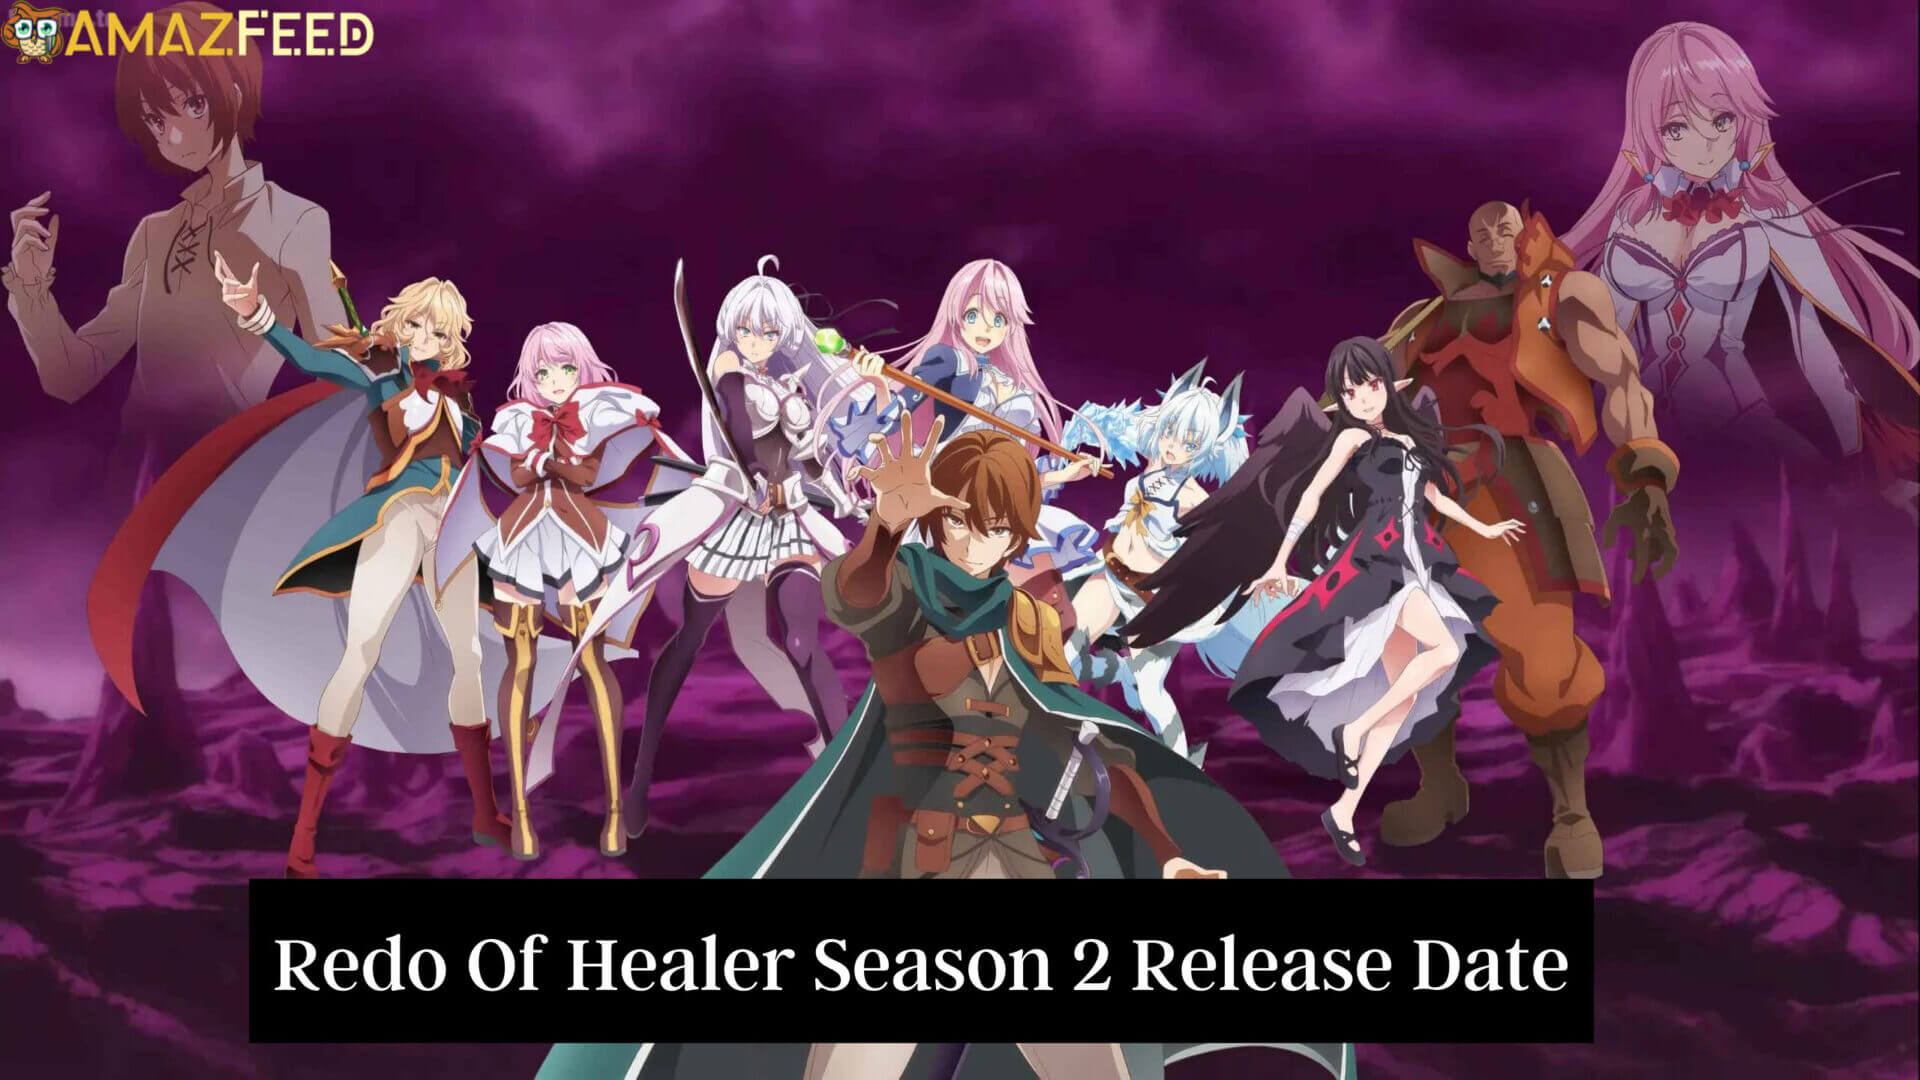 Redo Of Healer Season 2 ⇒ Release Date, News, Cast, Spoilers